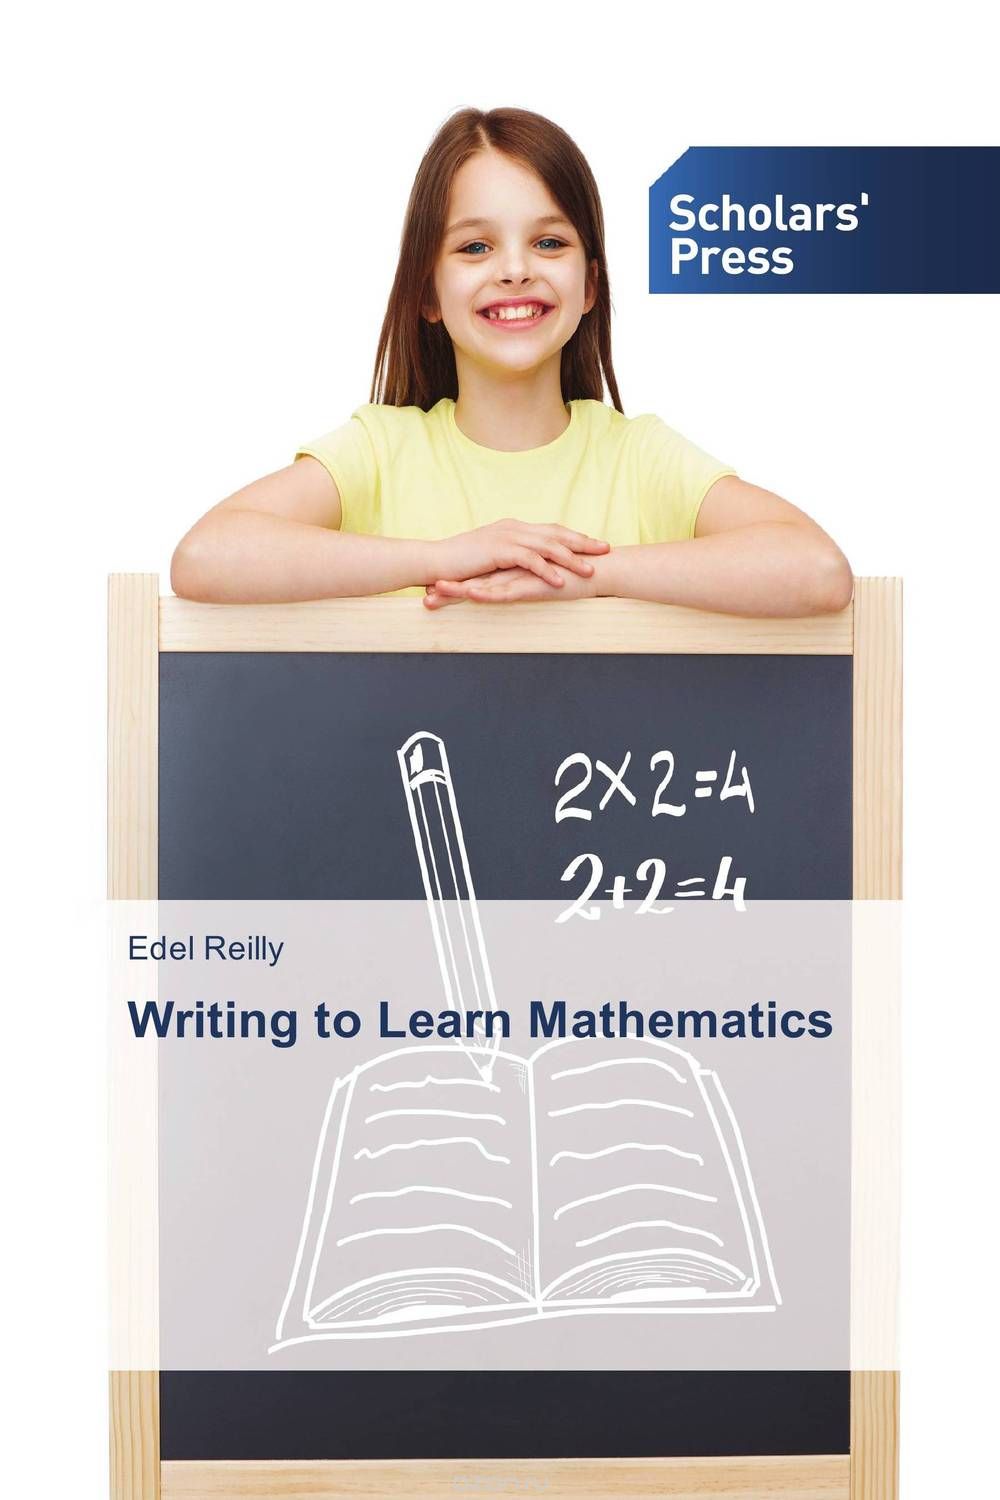 Скачать книгу "Writing to Learn Mathematics"